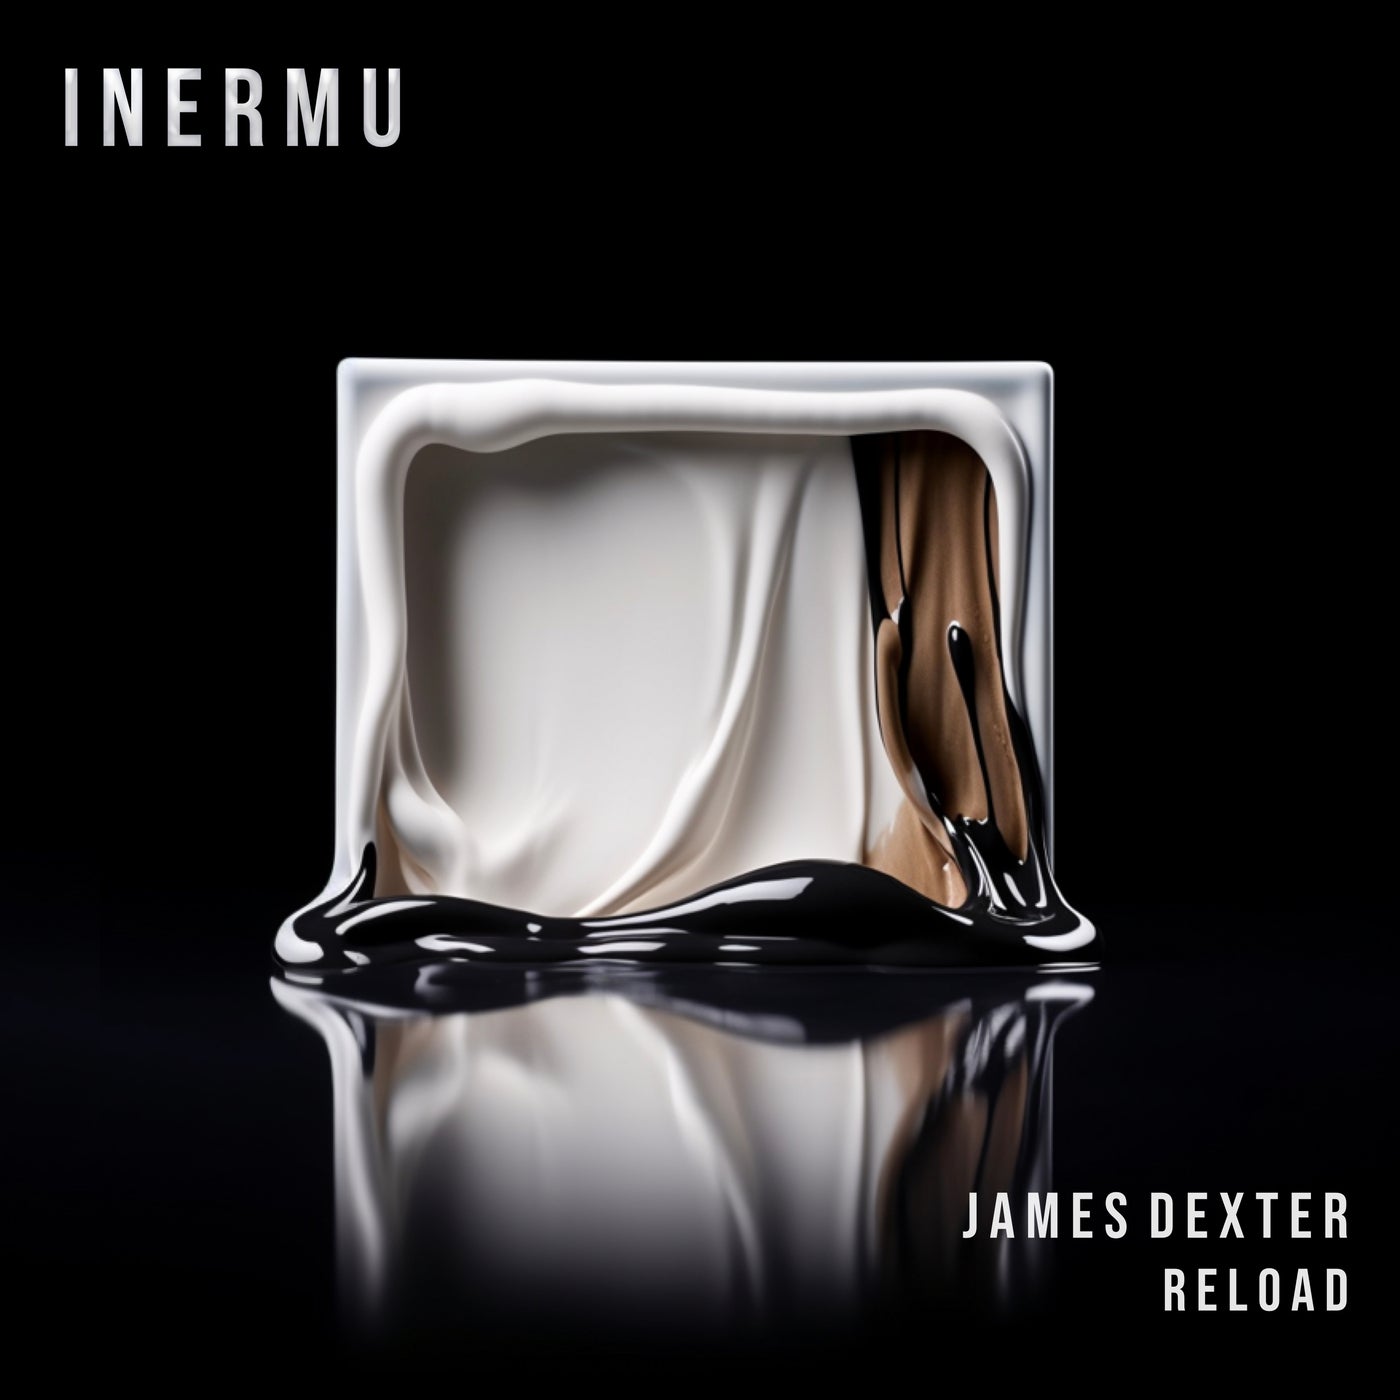 image cover: James Dexter - Reload on Inermu